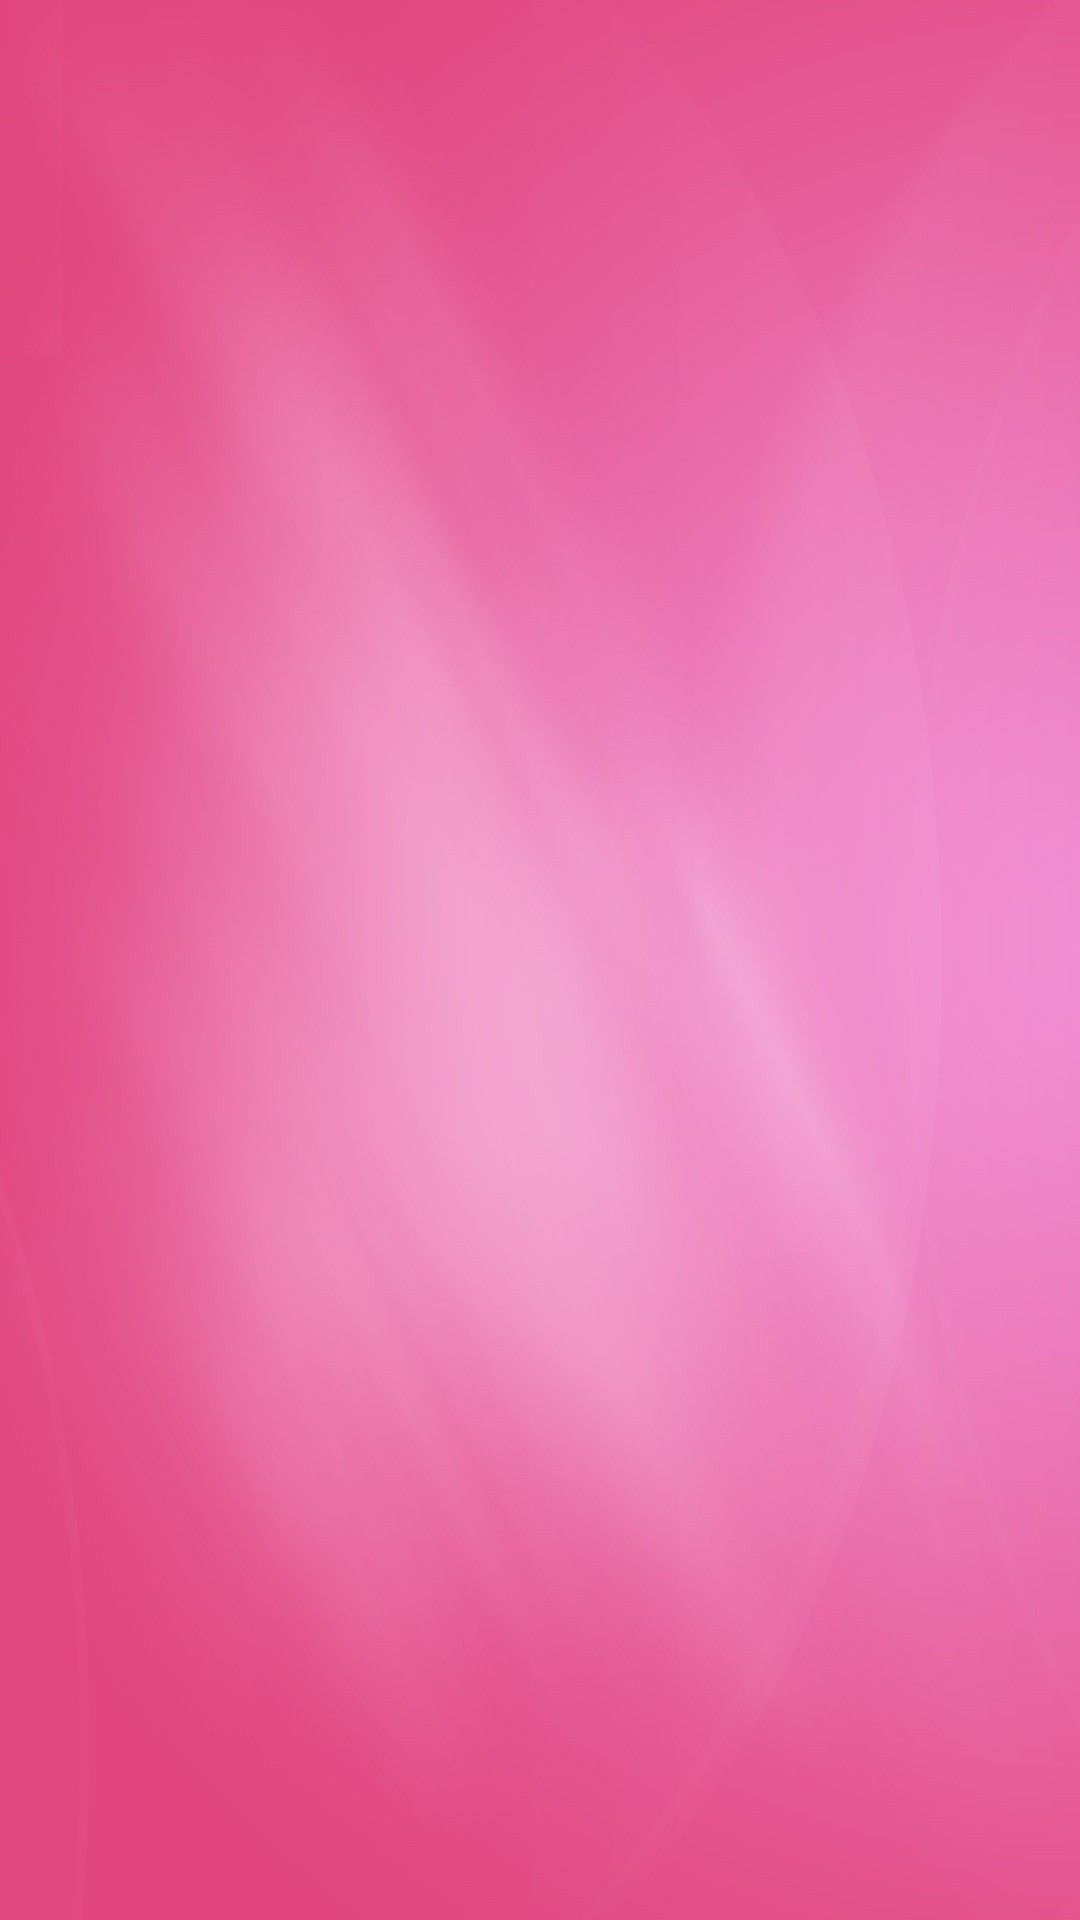 Paling populer Wallpaper Android Pink